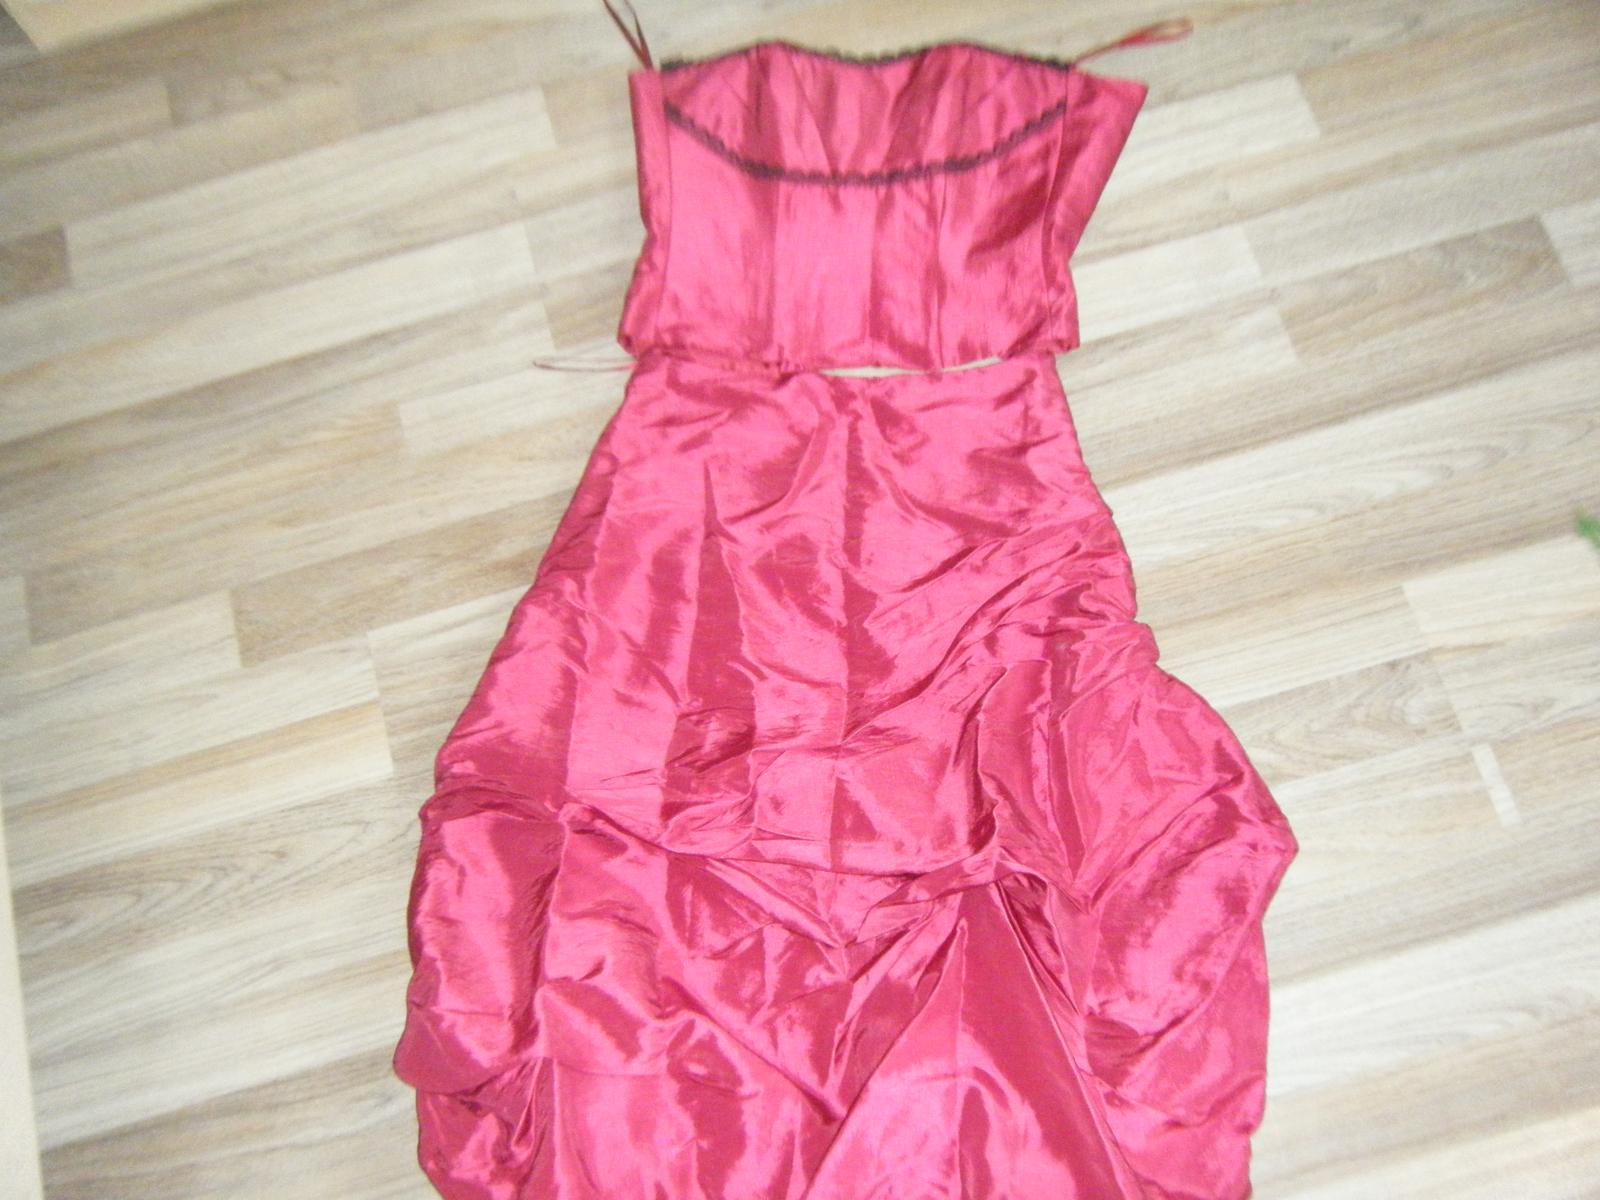 suknovy kostym - Obrázok č. 1